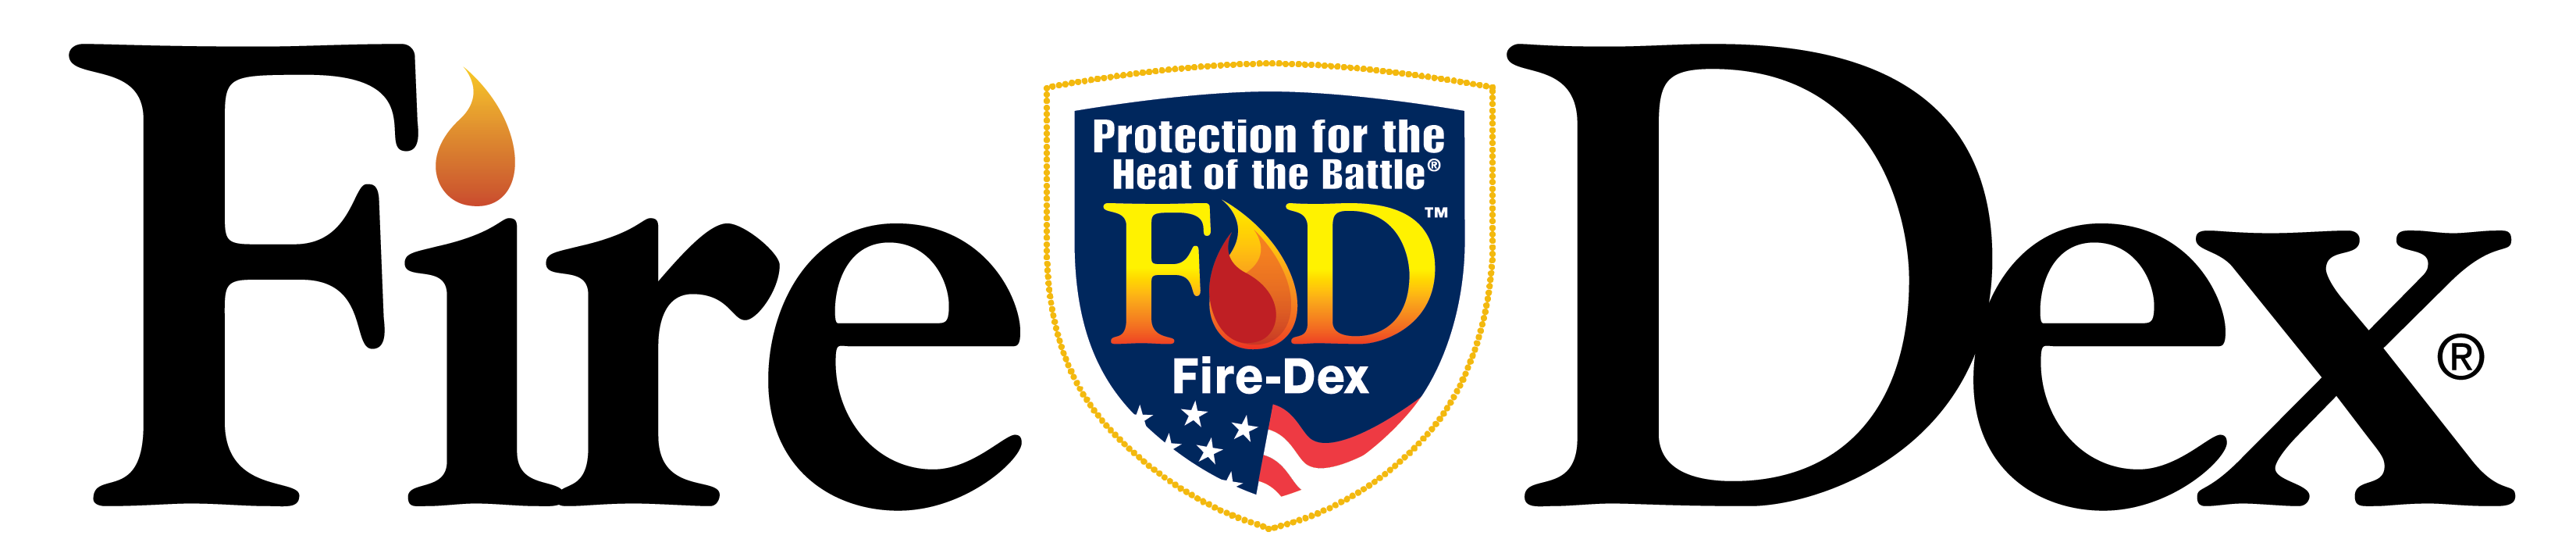 Fire-Dex logo